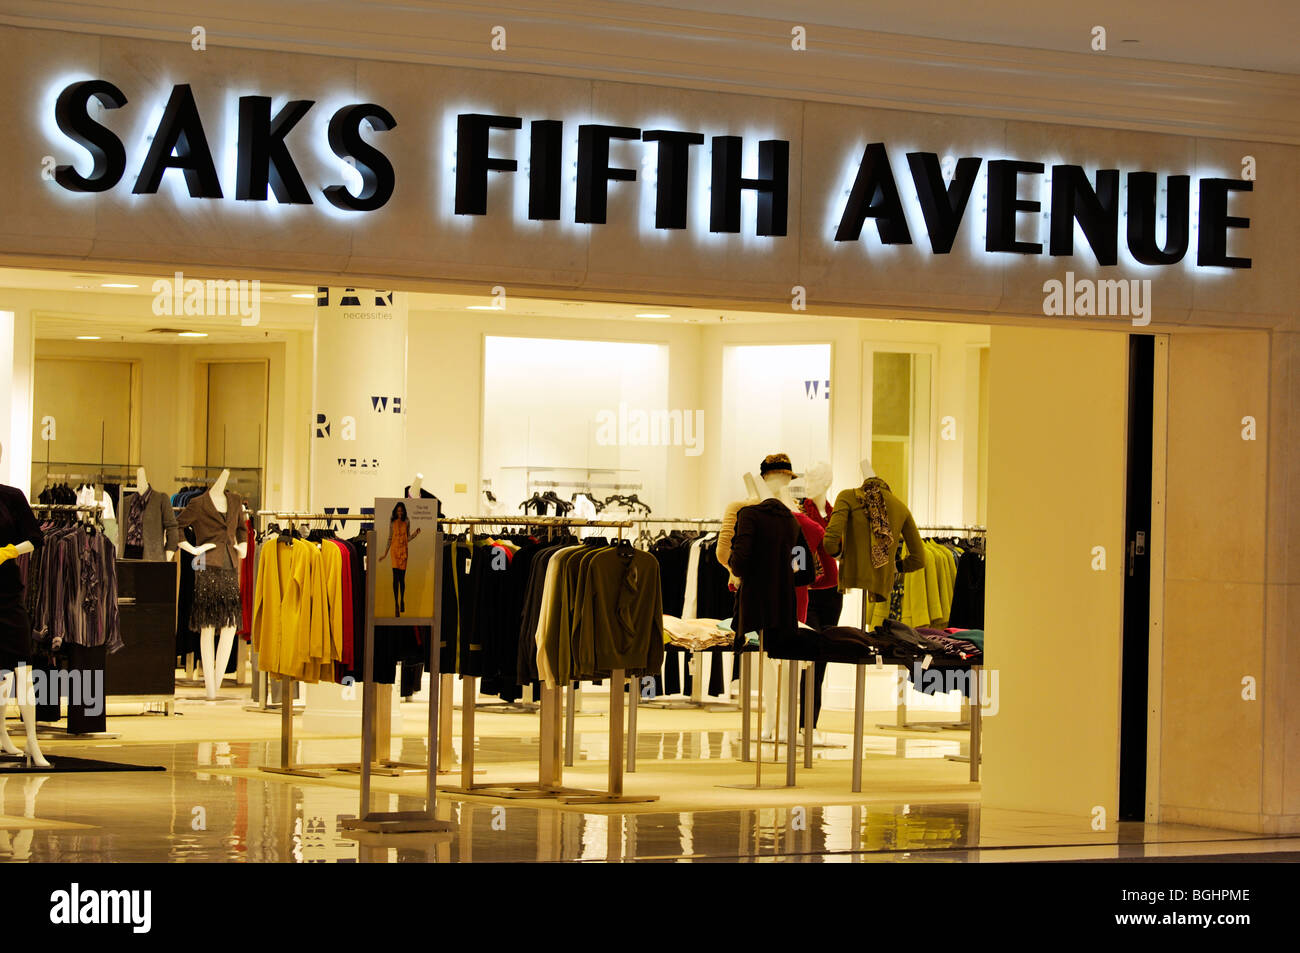 Saks Fifth Avenue store Stock Photo